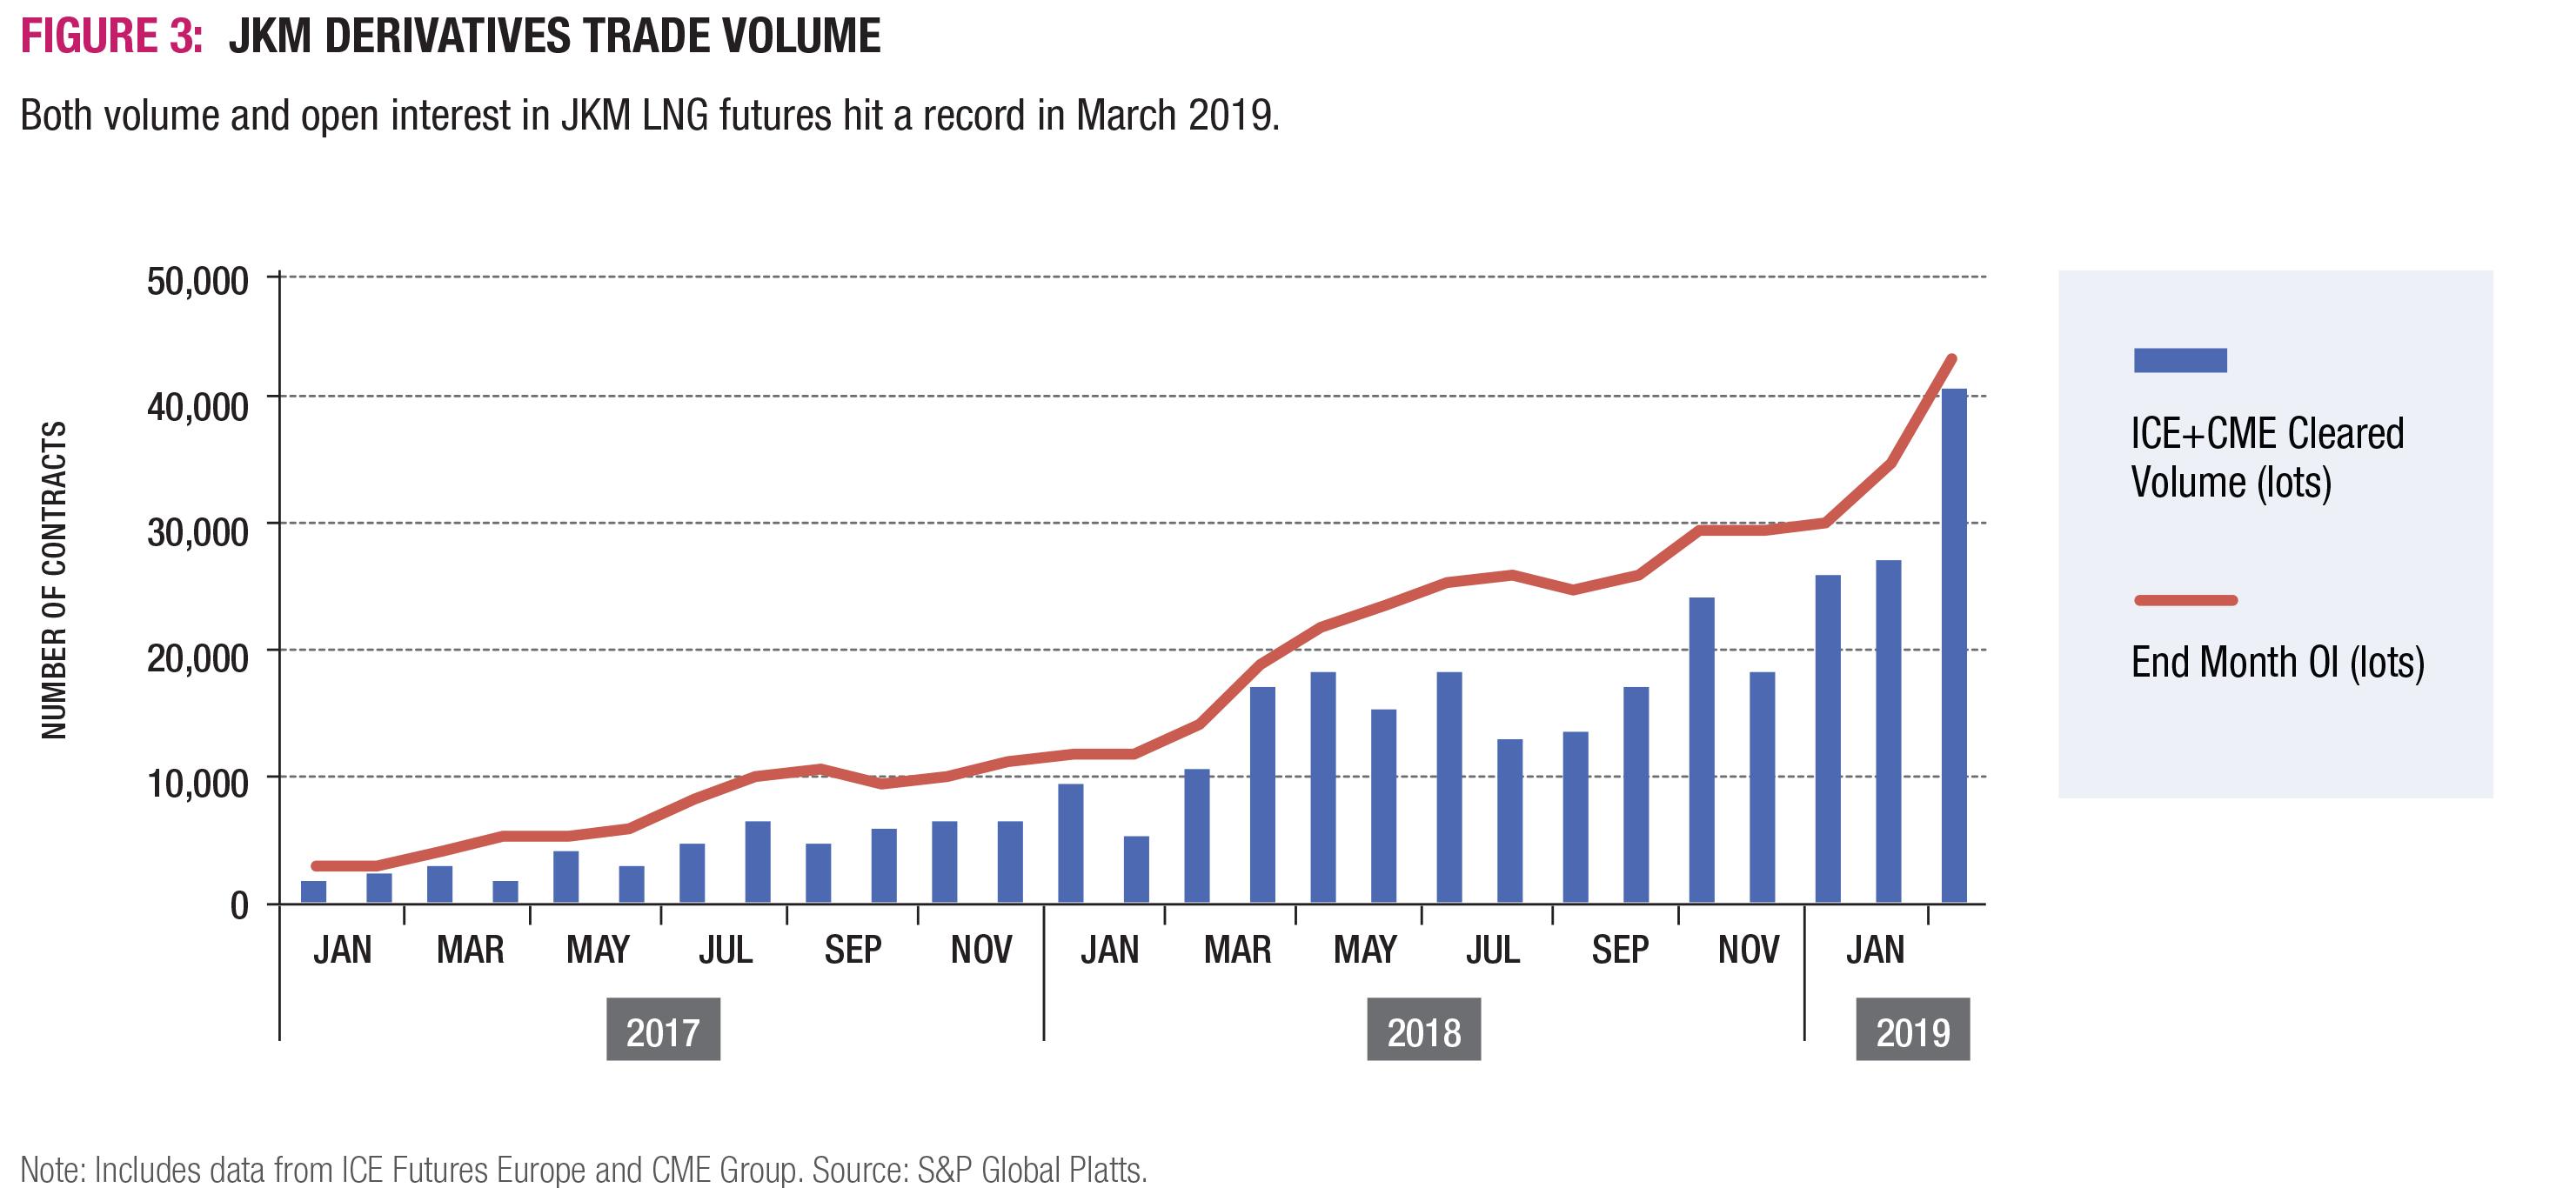 JKM derivatives trade volume